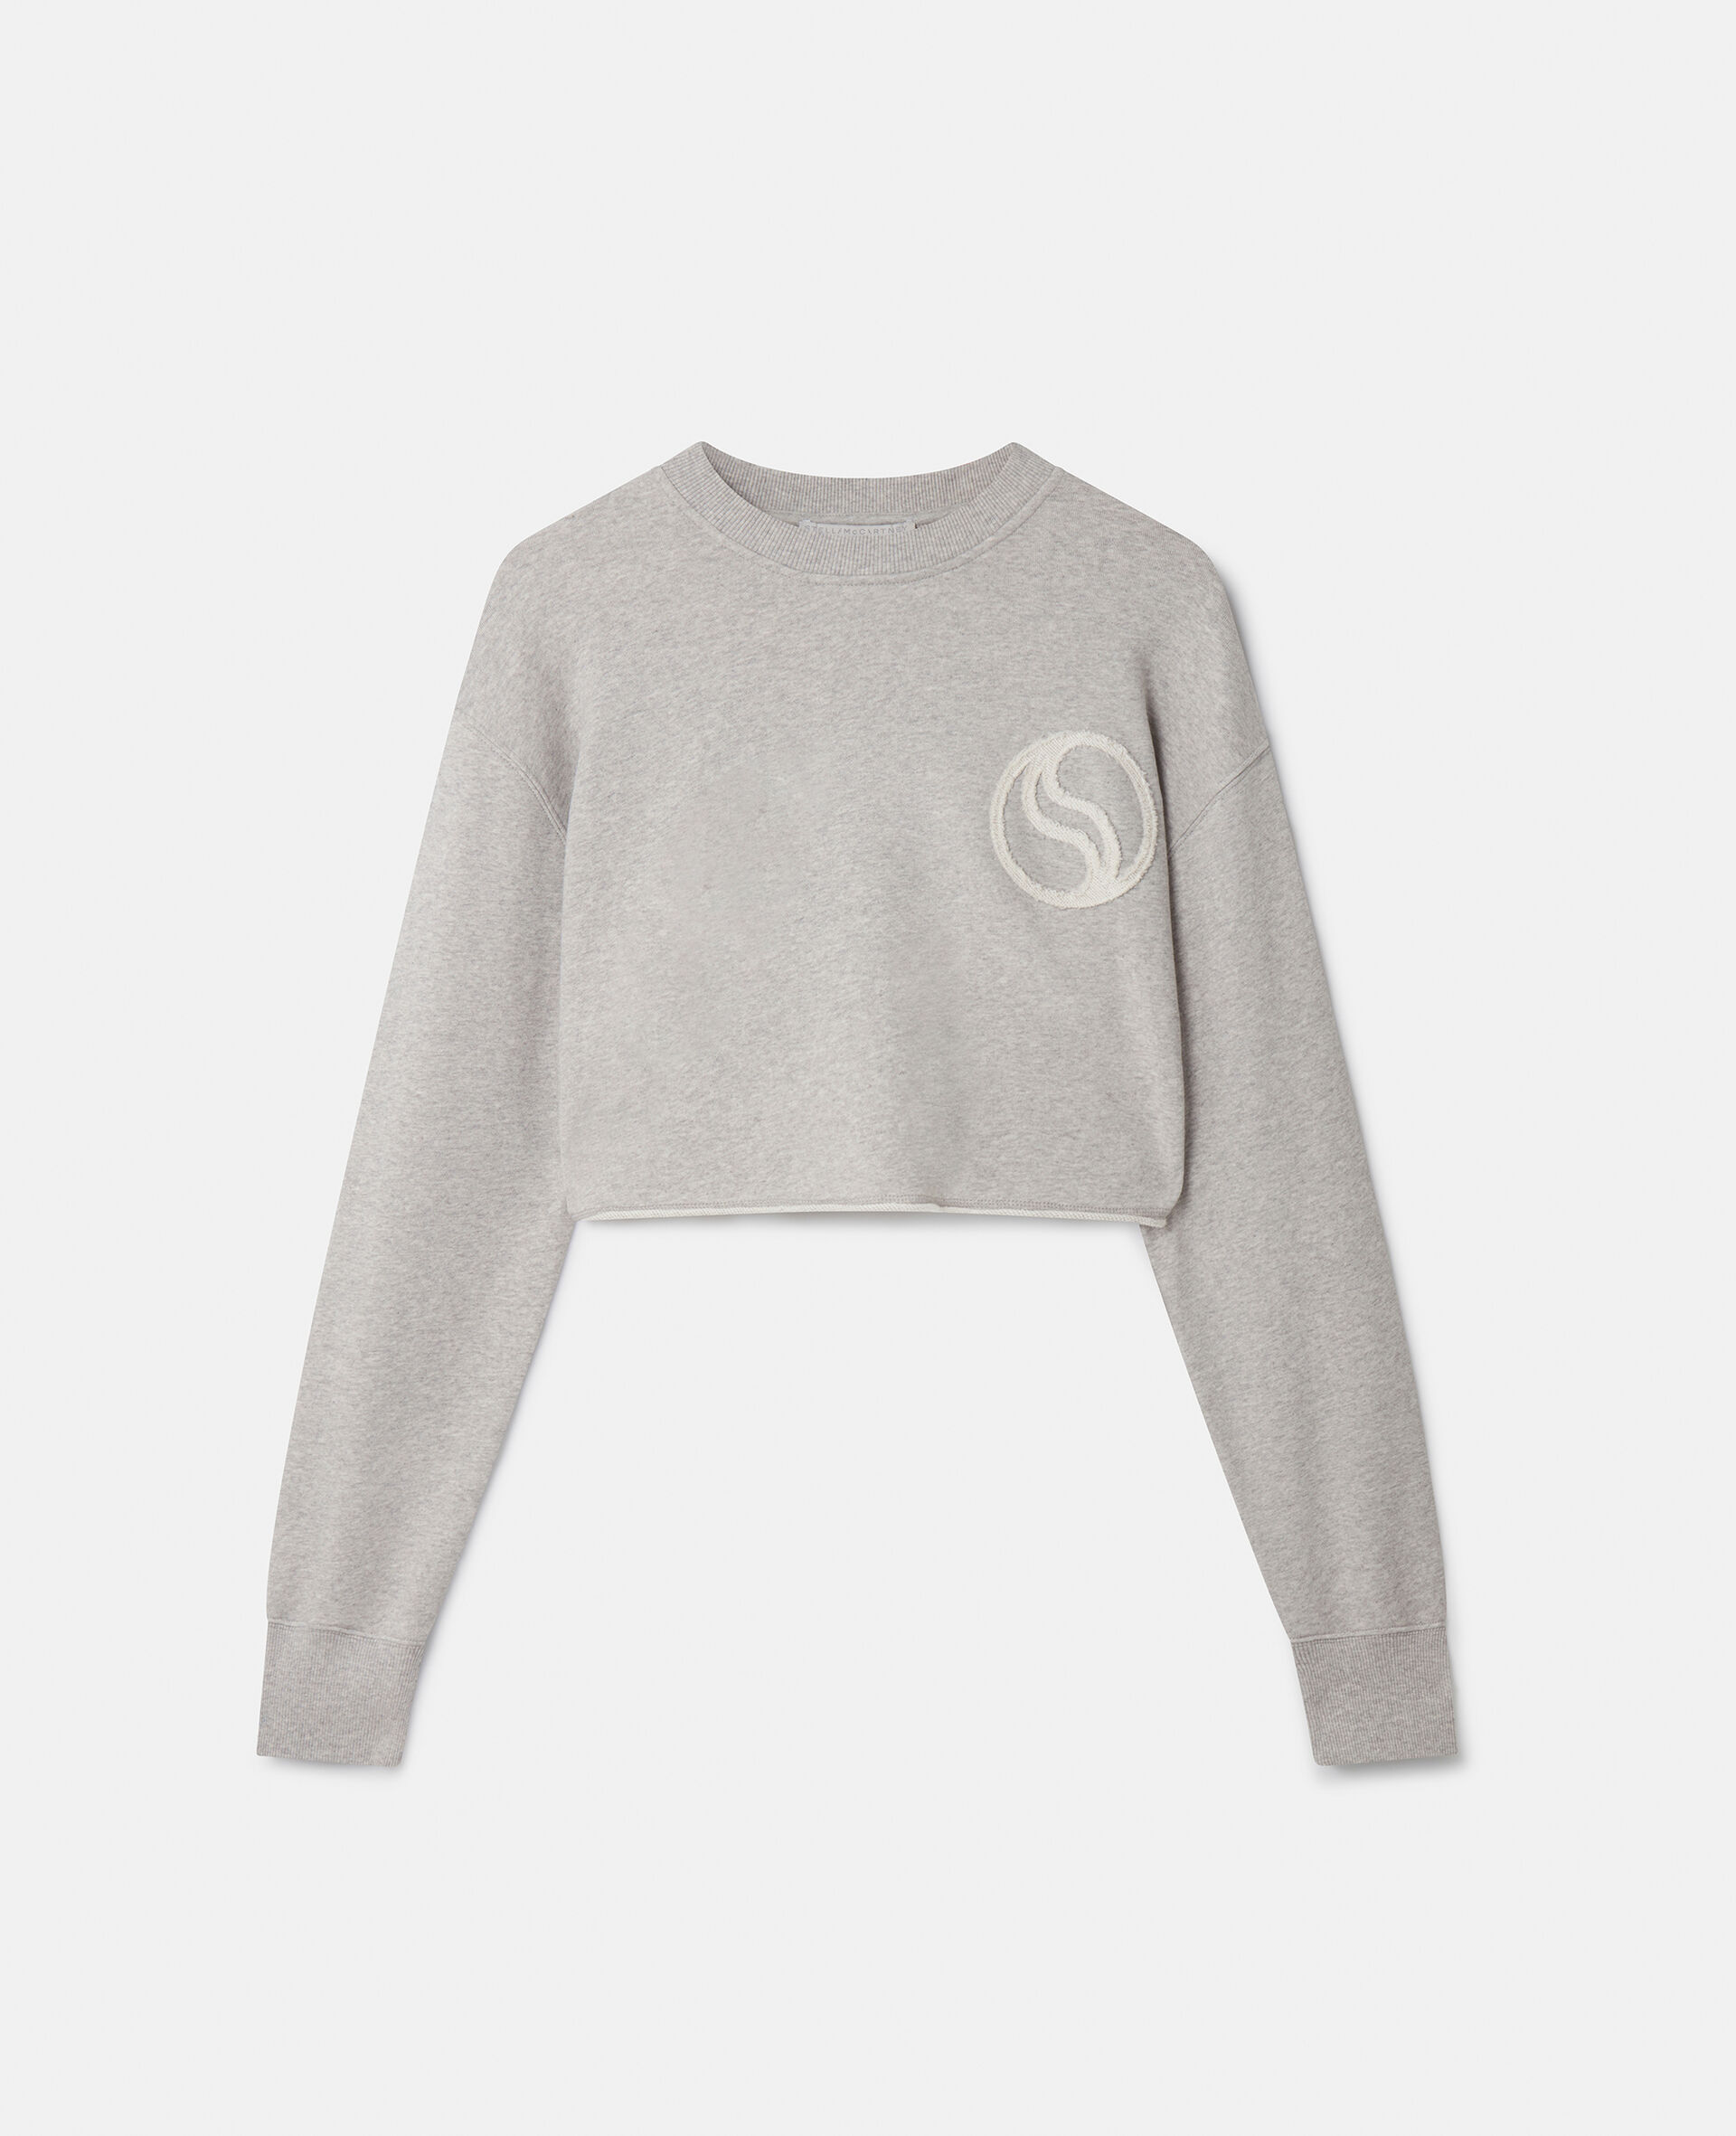 S-Wave Cropped Sweatshirt-Grey-large image number 0